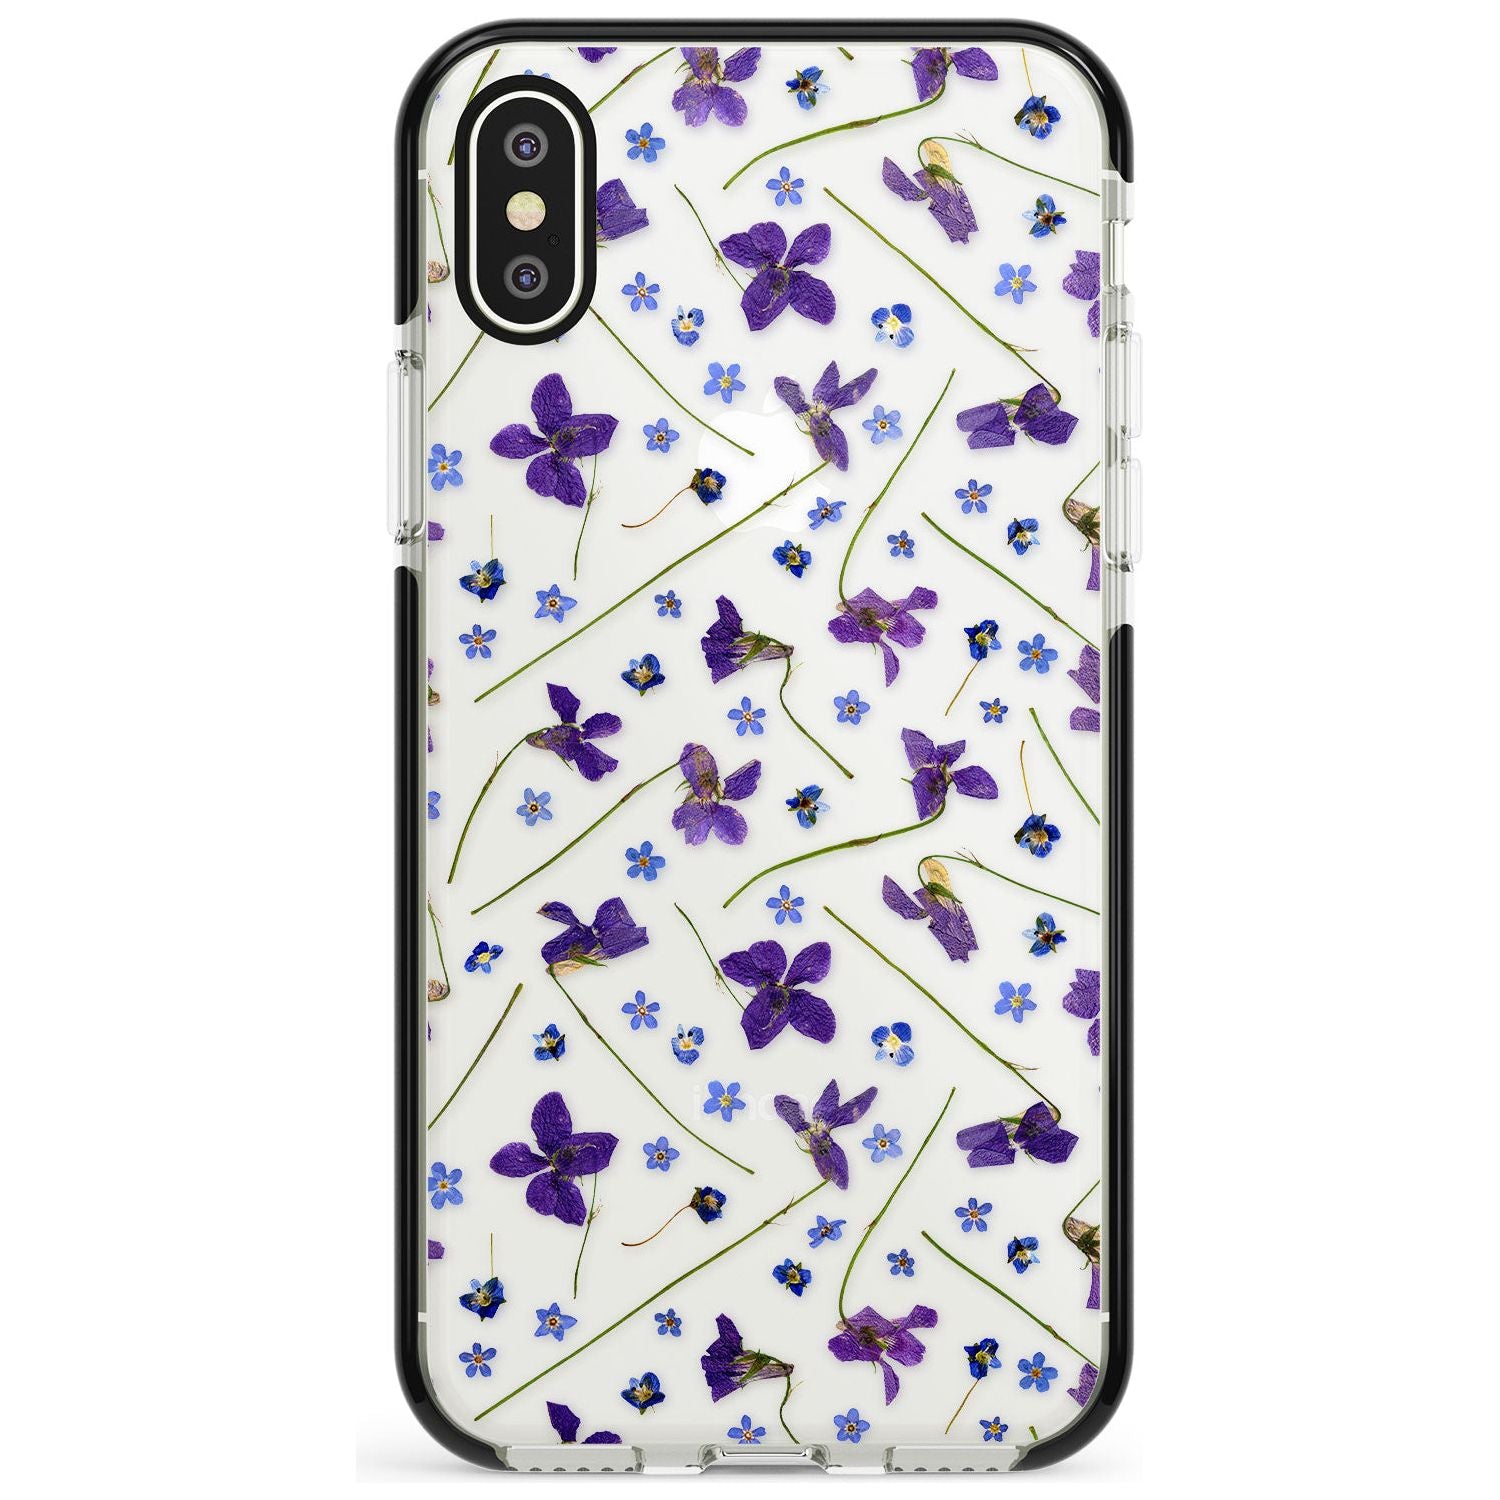 Violet & Blue Floral Pattern Design Black Impact Phone Case for iPhone X XS Max XR